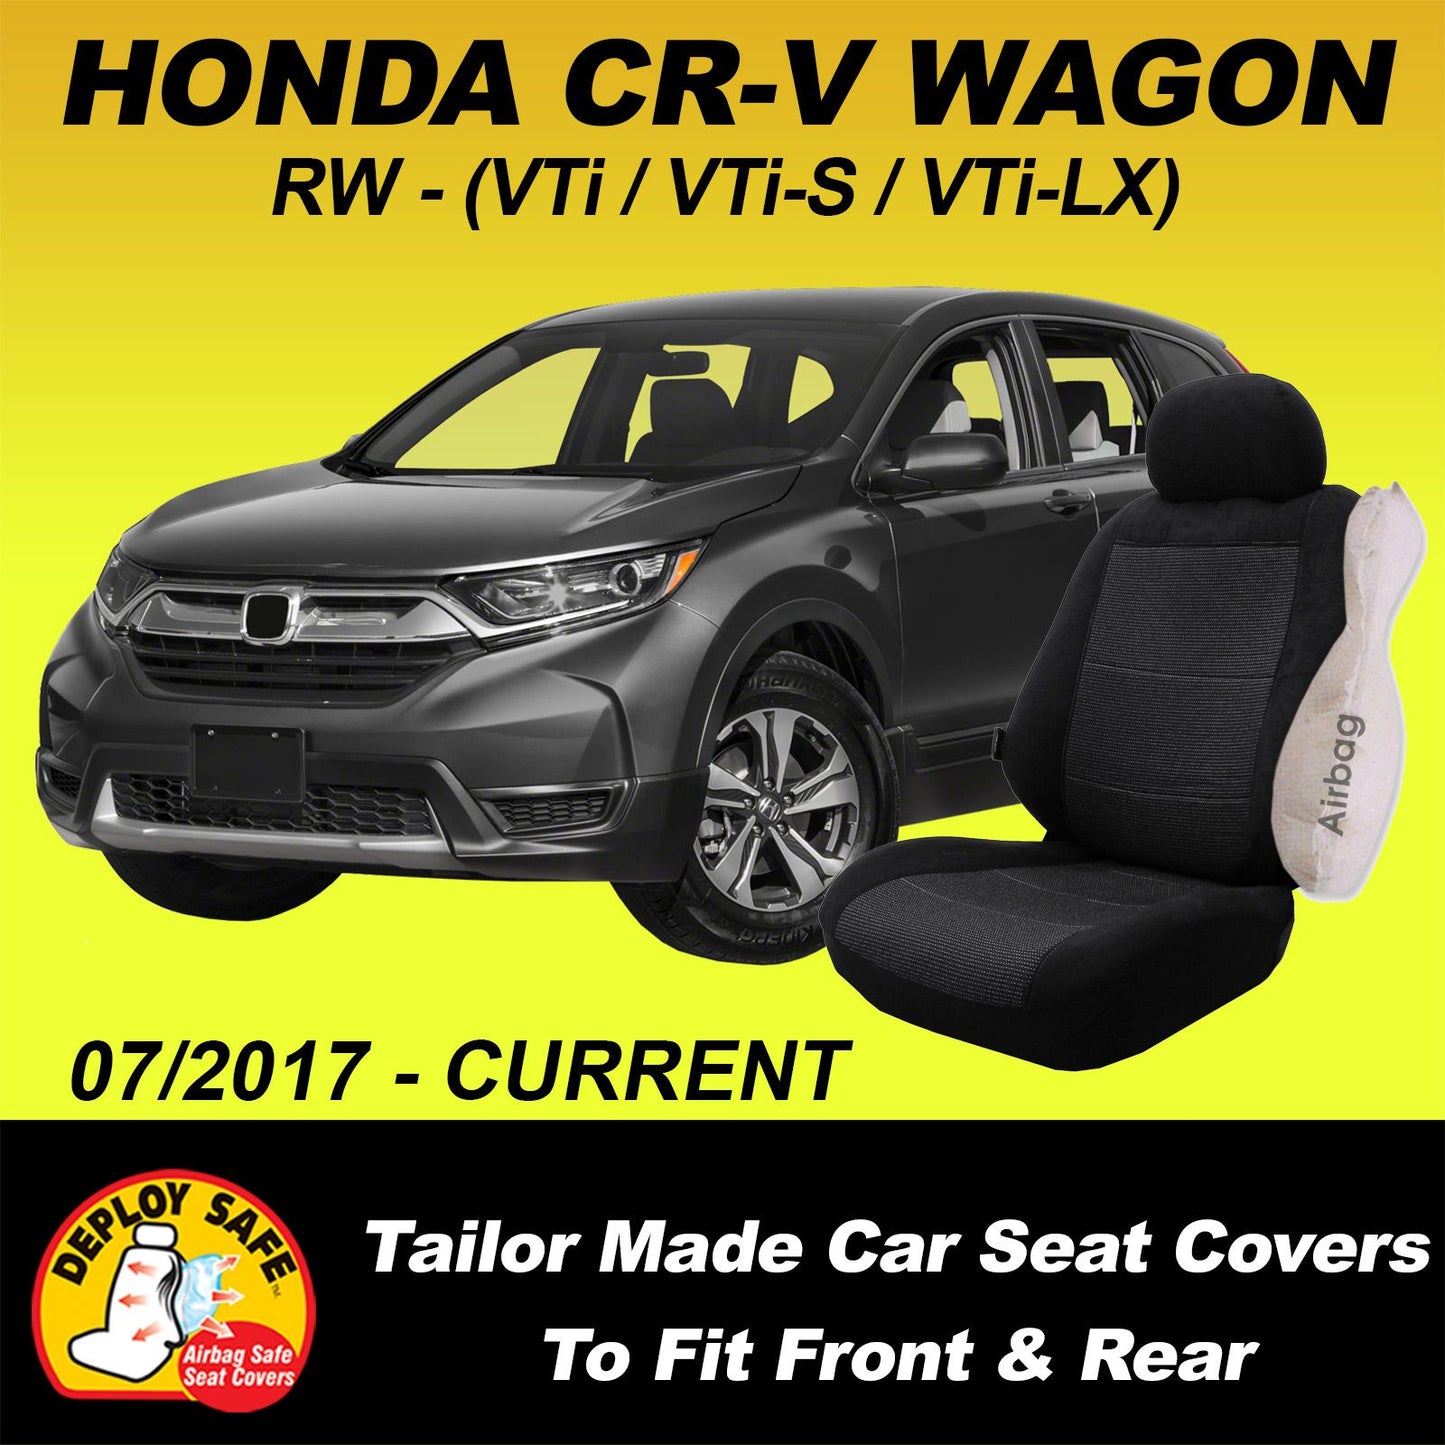 Honda CR-V Wagon 07/17-CURRENT